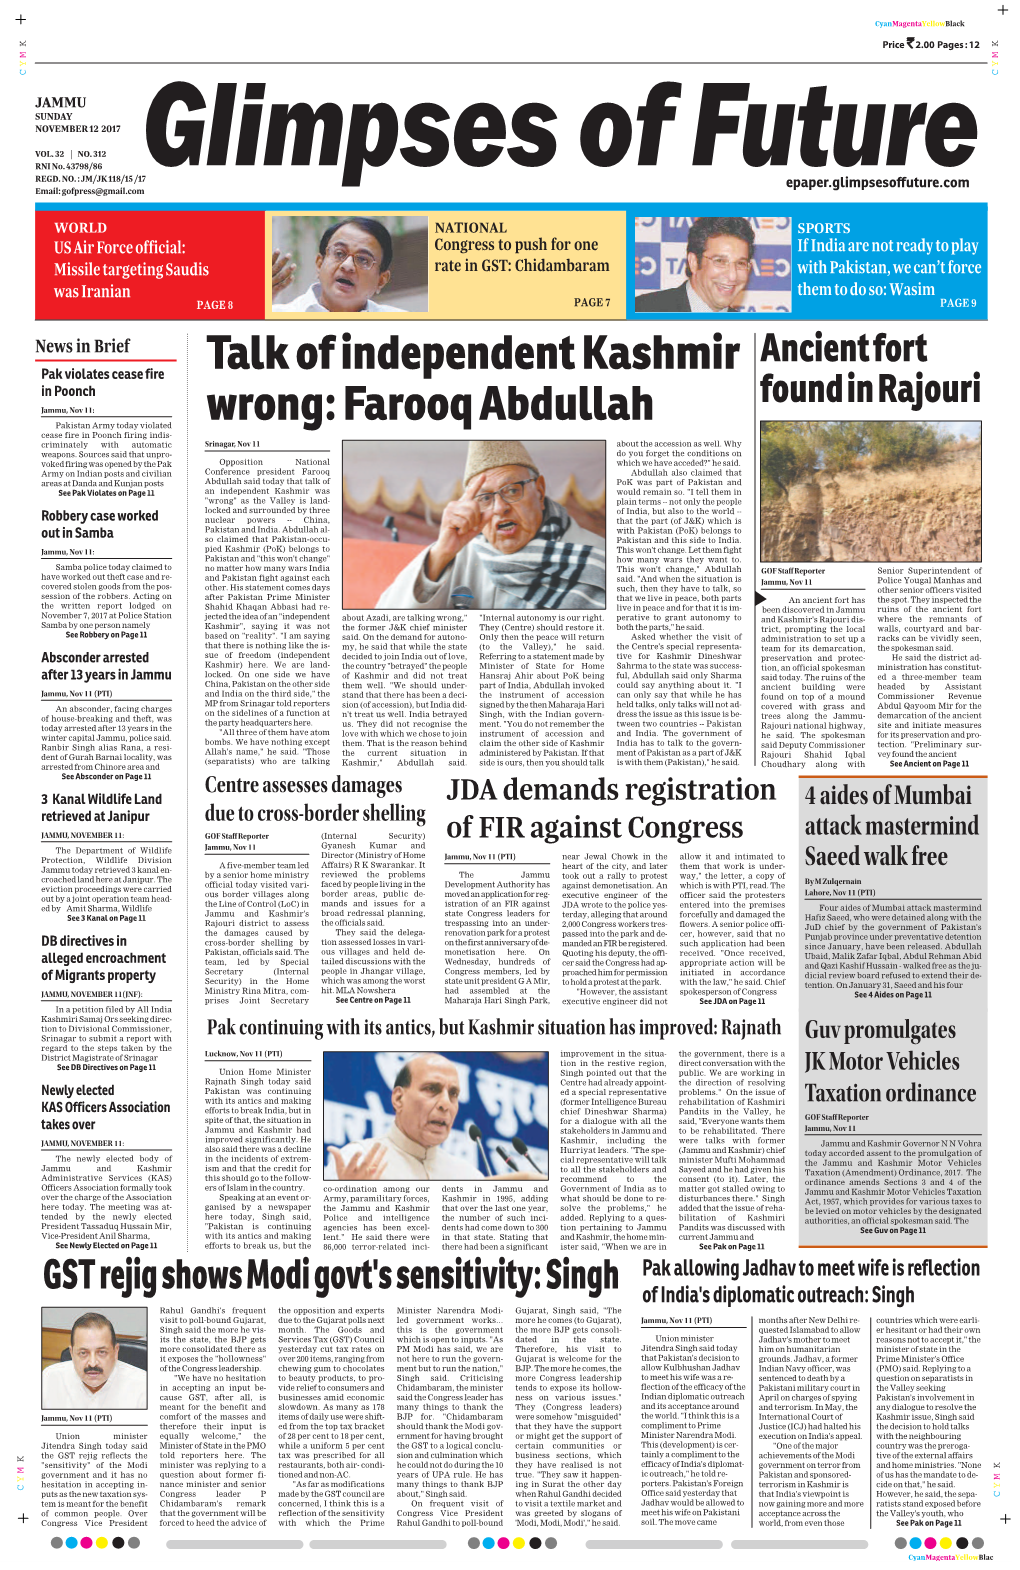 Talk of Independent Kashmir Wrong